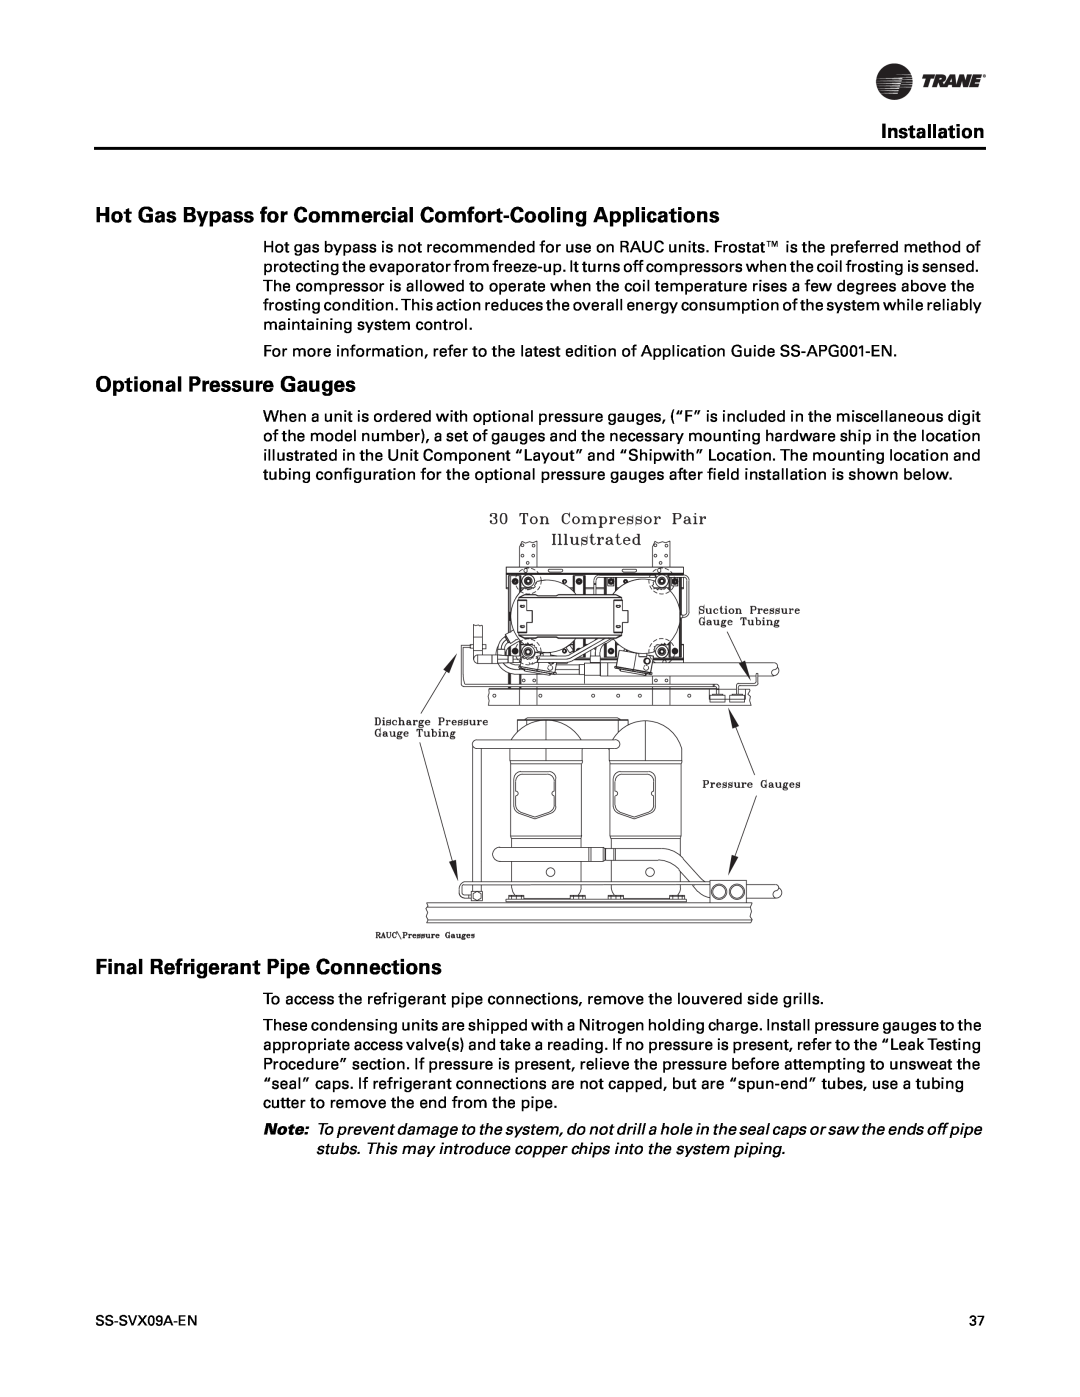 Trane RAUC-C30, RAUC-C50, RAUC-C60 Optional Pressure Gauges, Final Refrigerant Pipe Connections, Installation, SS-SVX09A-EN 